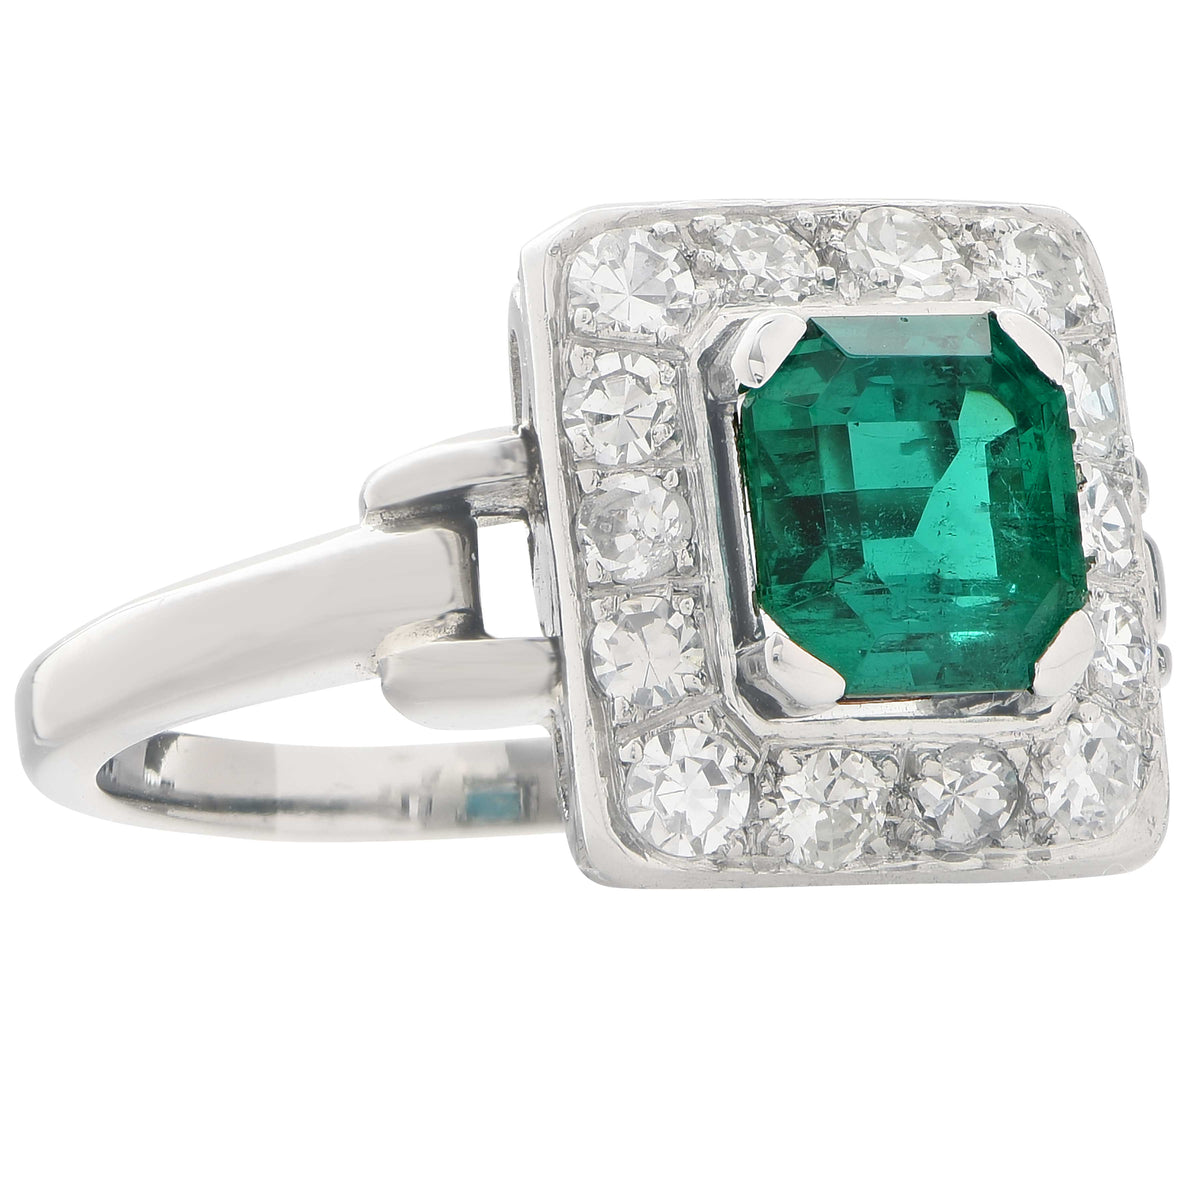 1.36 Carat AGL Colombian Emerald No Treatment Diamond Ring